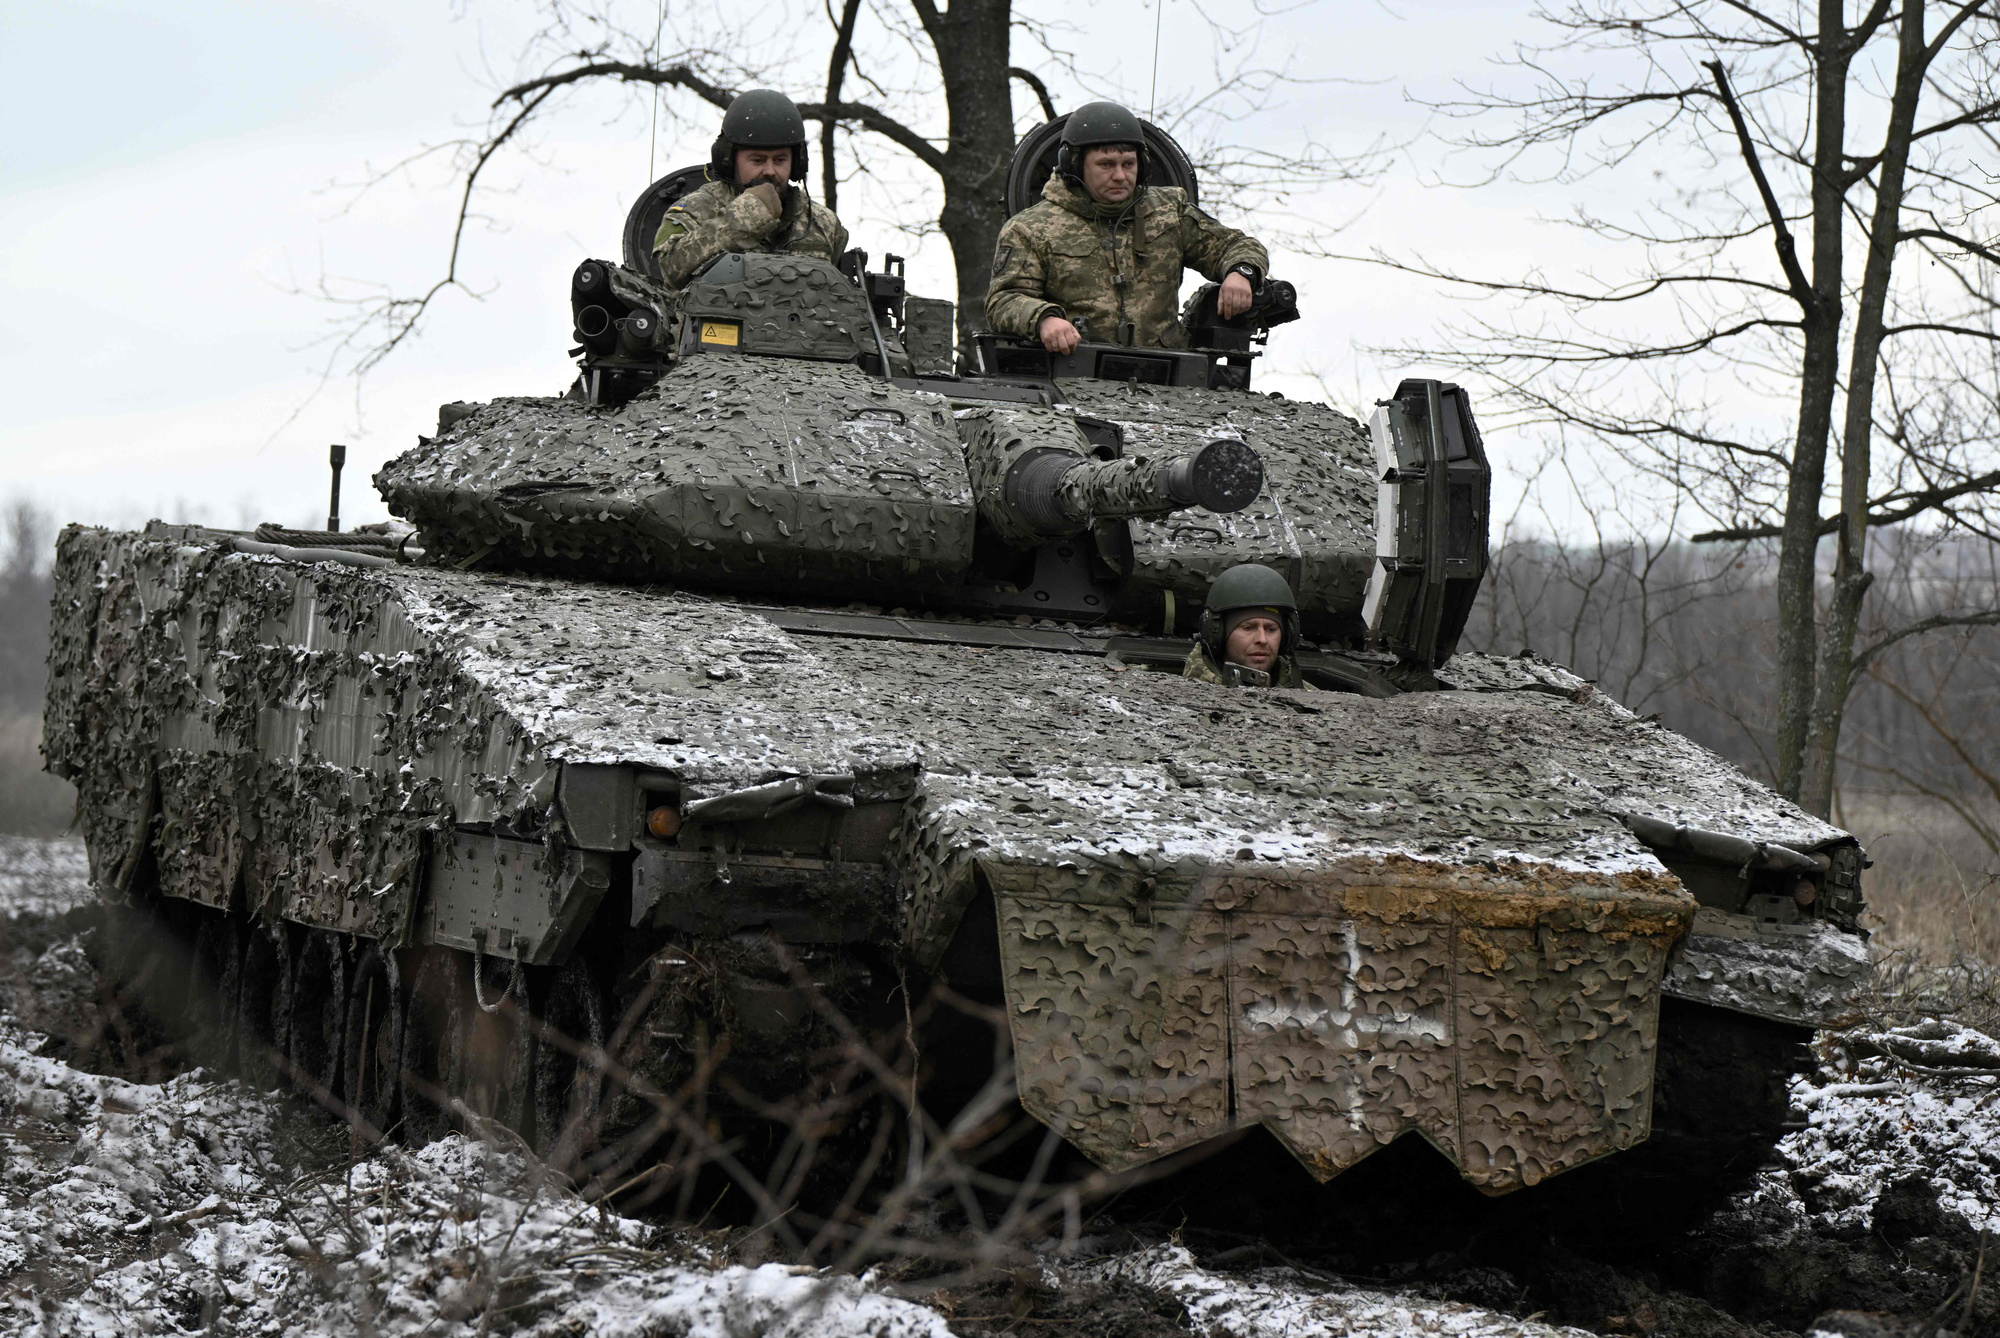 Ukrainian servicemen test their Sweden made CV90 armored infantry combat vehicle. Illustrative image. Photo via Eastnews.ua.